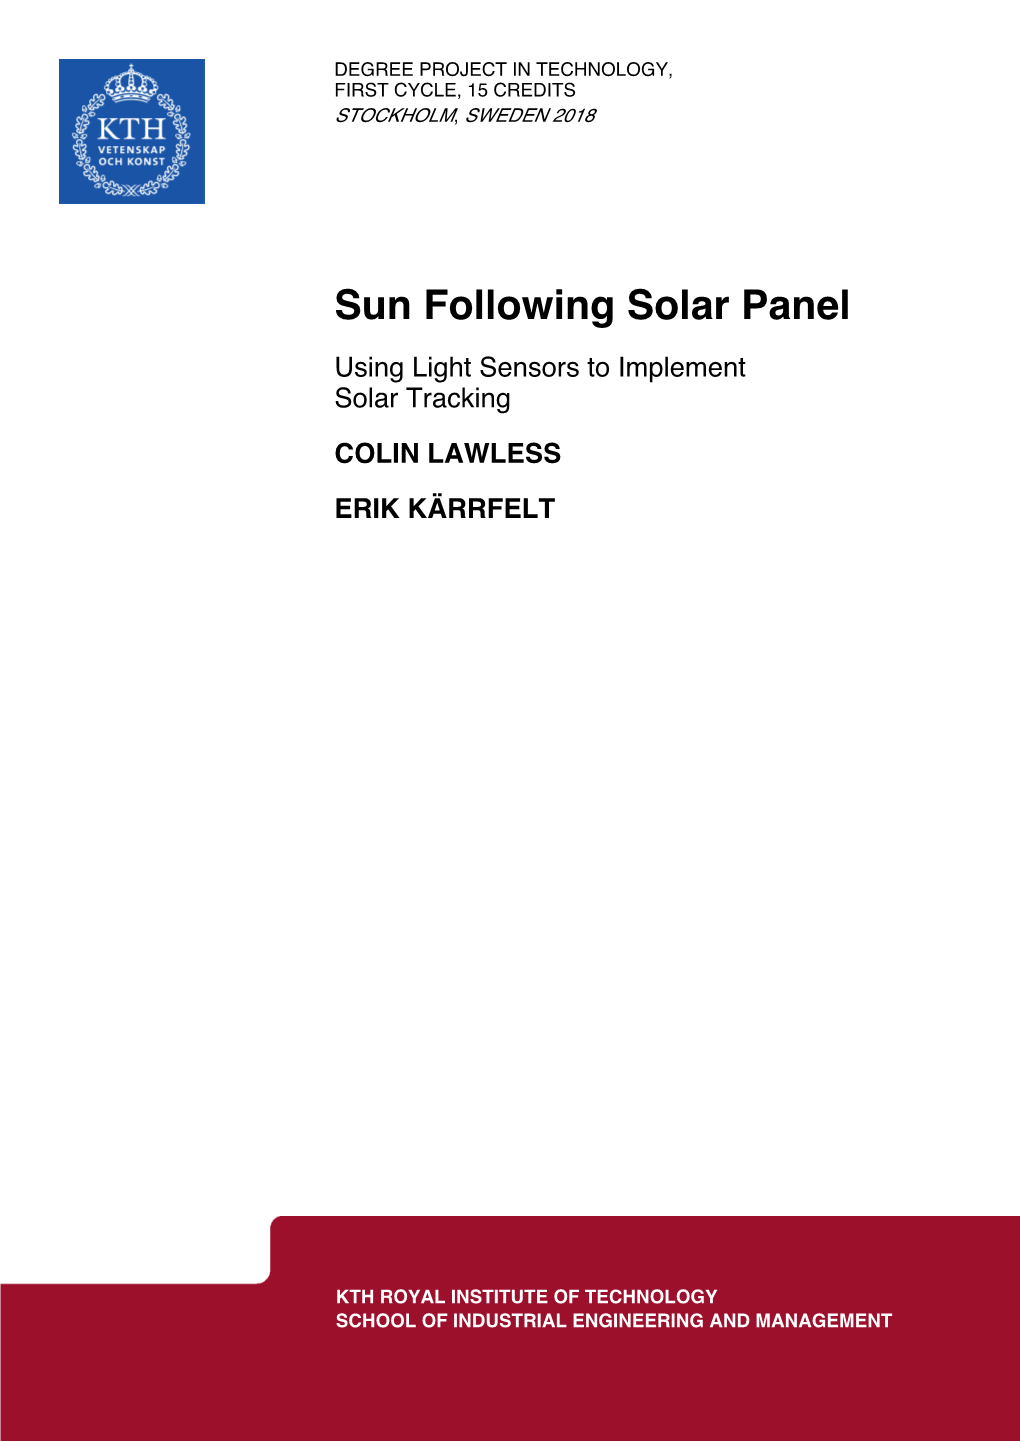 Sun Following Solar Panel Using Light Sensors to Implement Solar Tracking